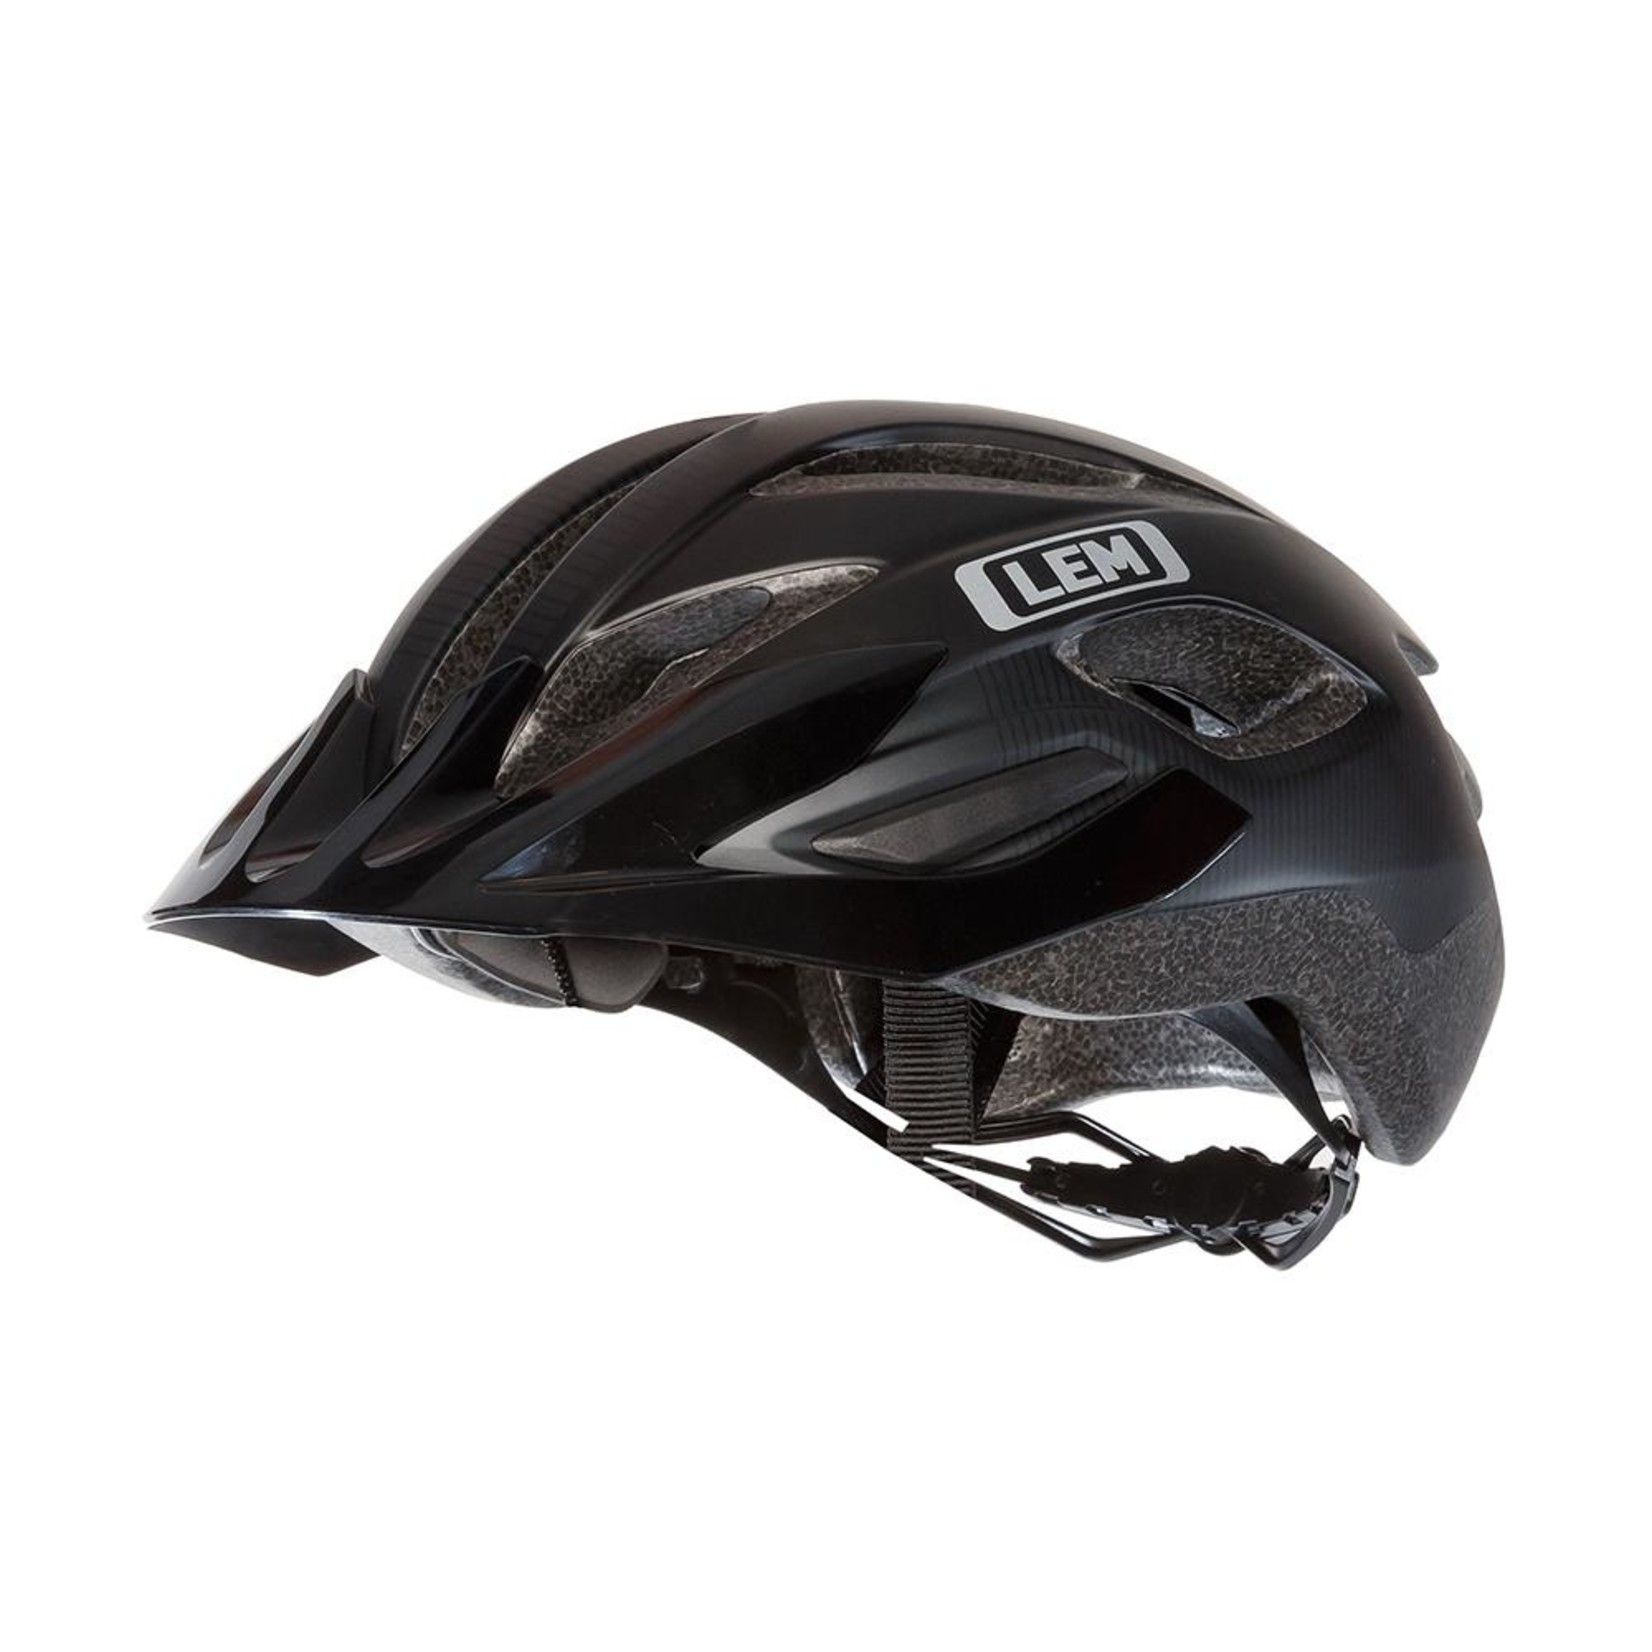 Boulevard Commuter Bike Helmet